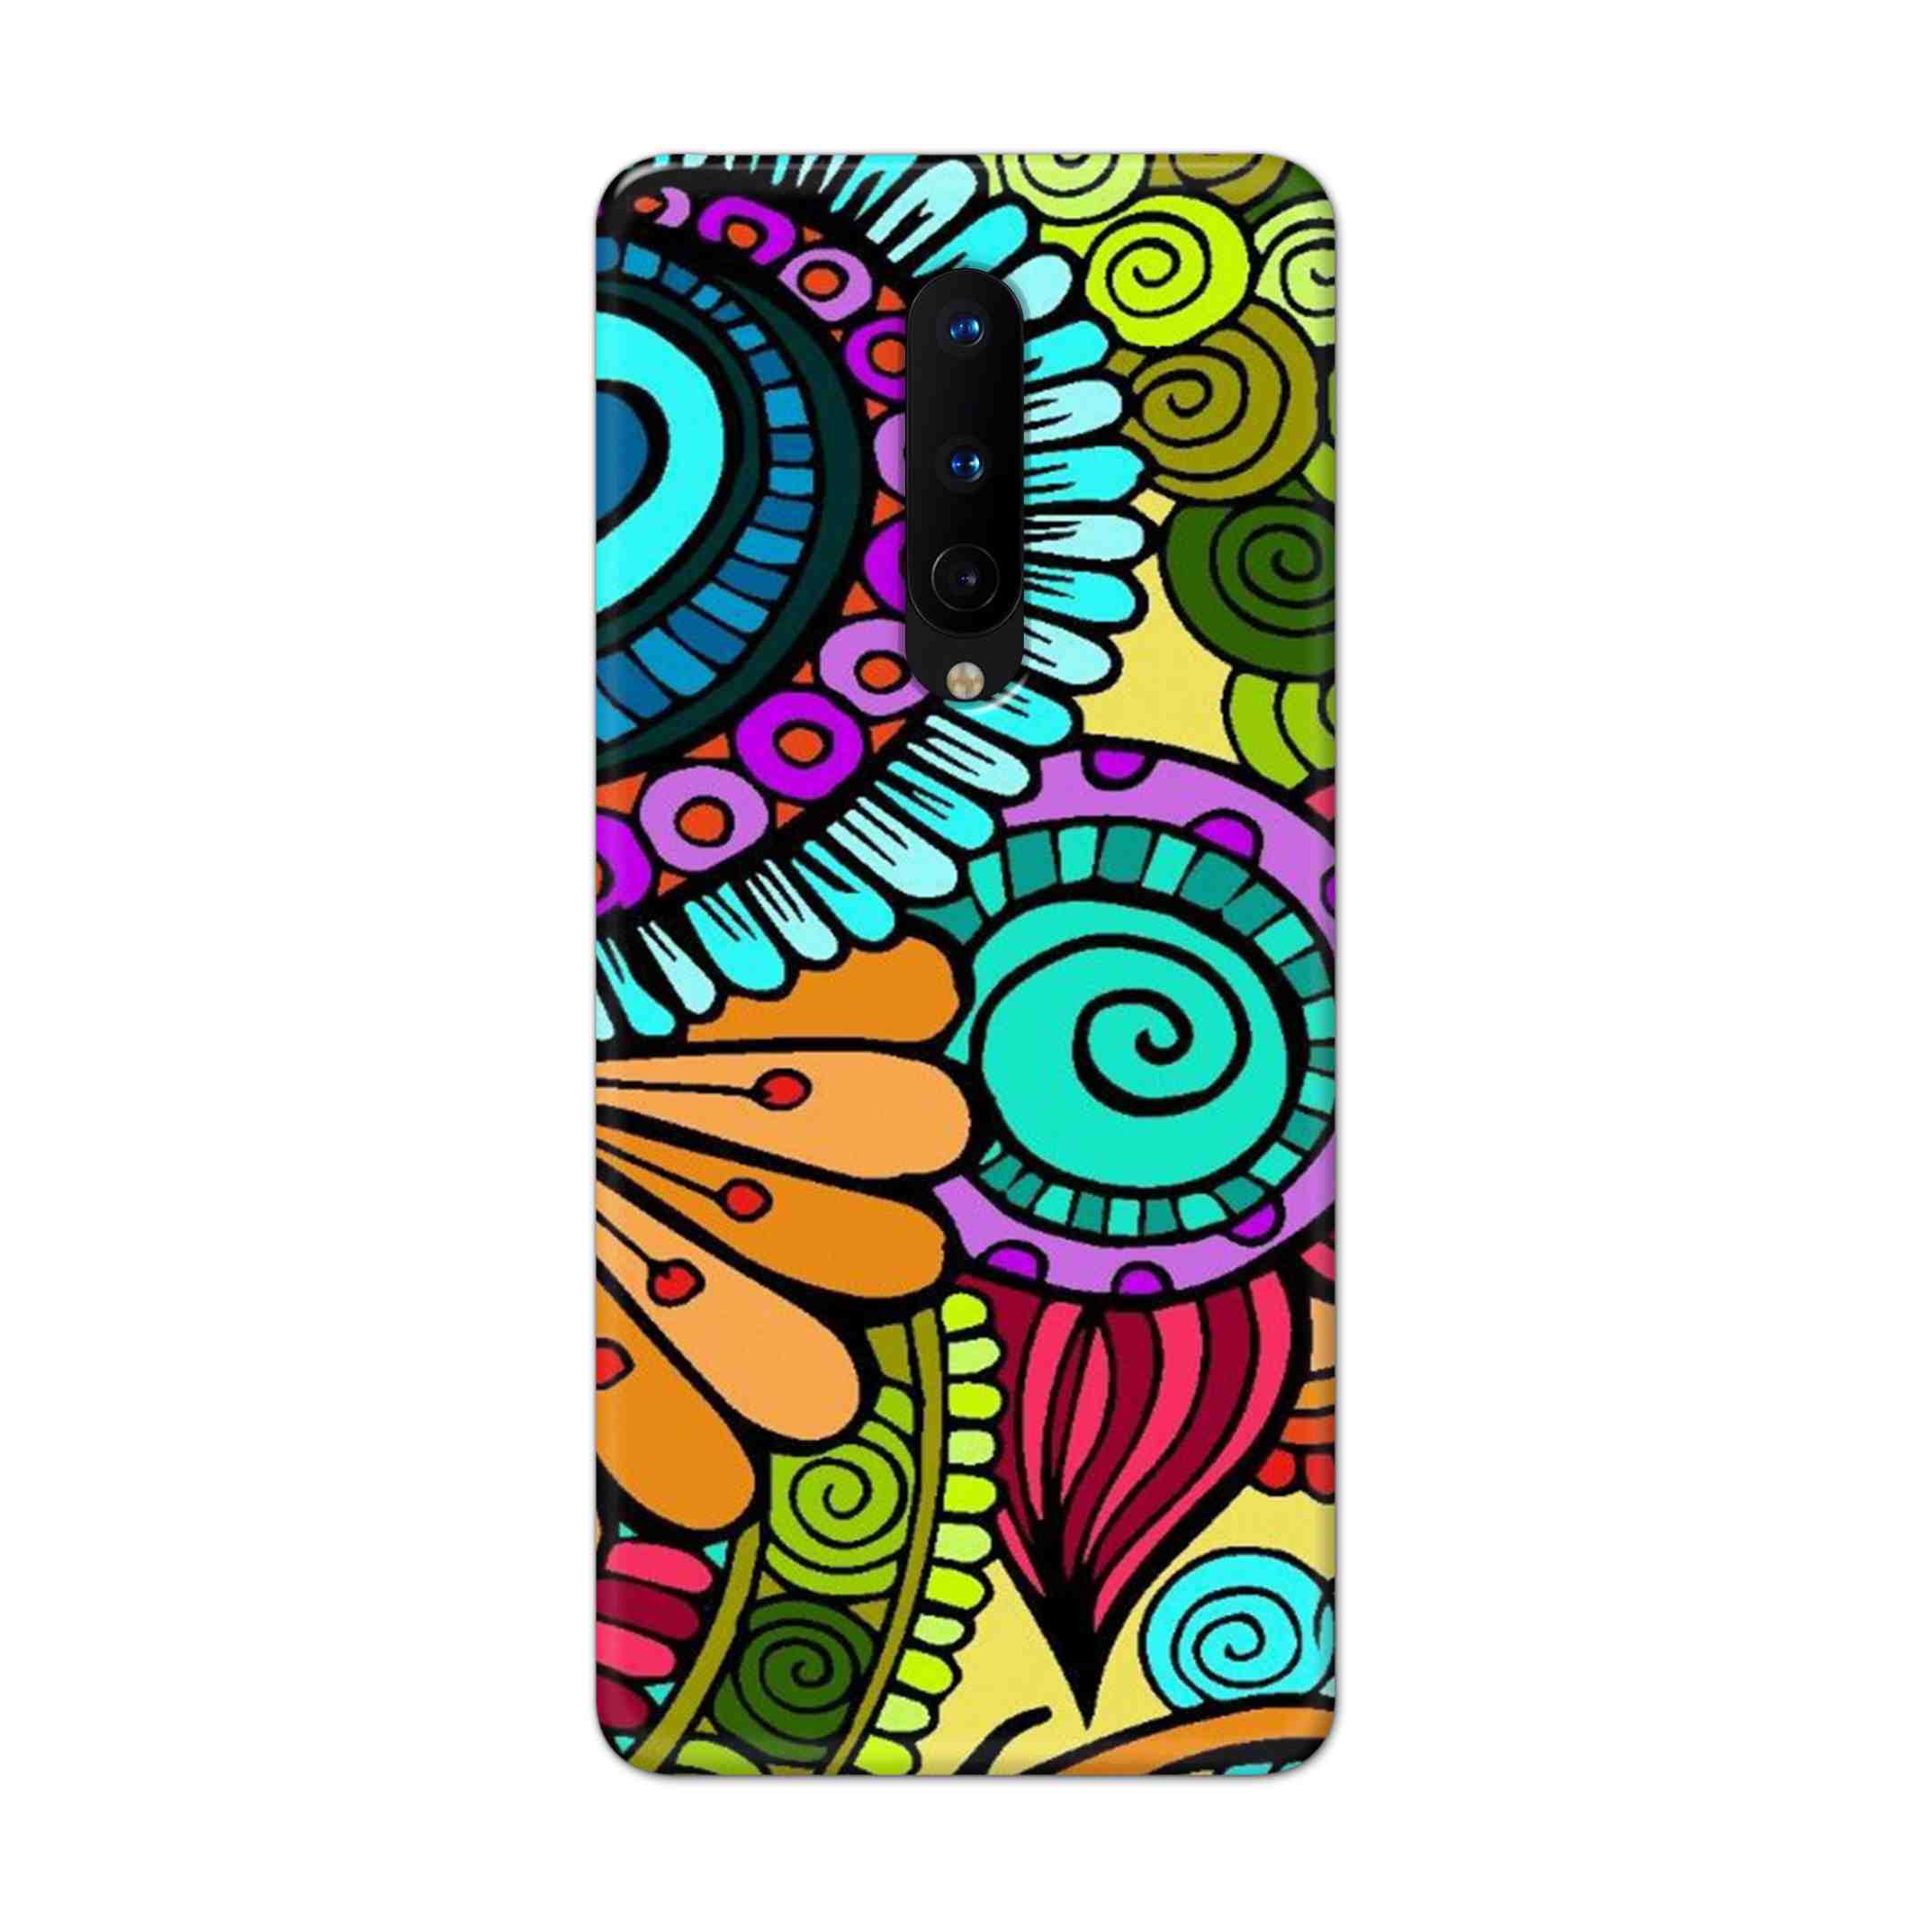 Buy The Kalachakra Mandala Hard Back Mobile Phone Case Cover For OnePlus 8 Online